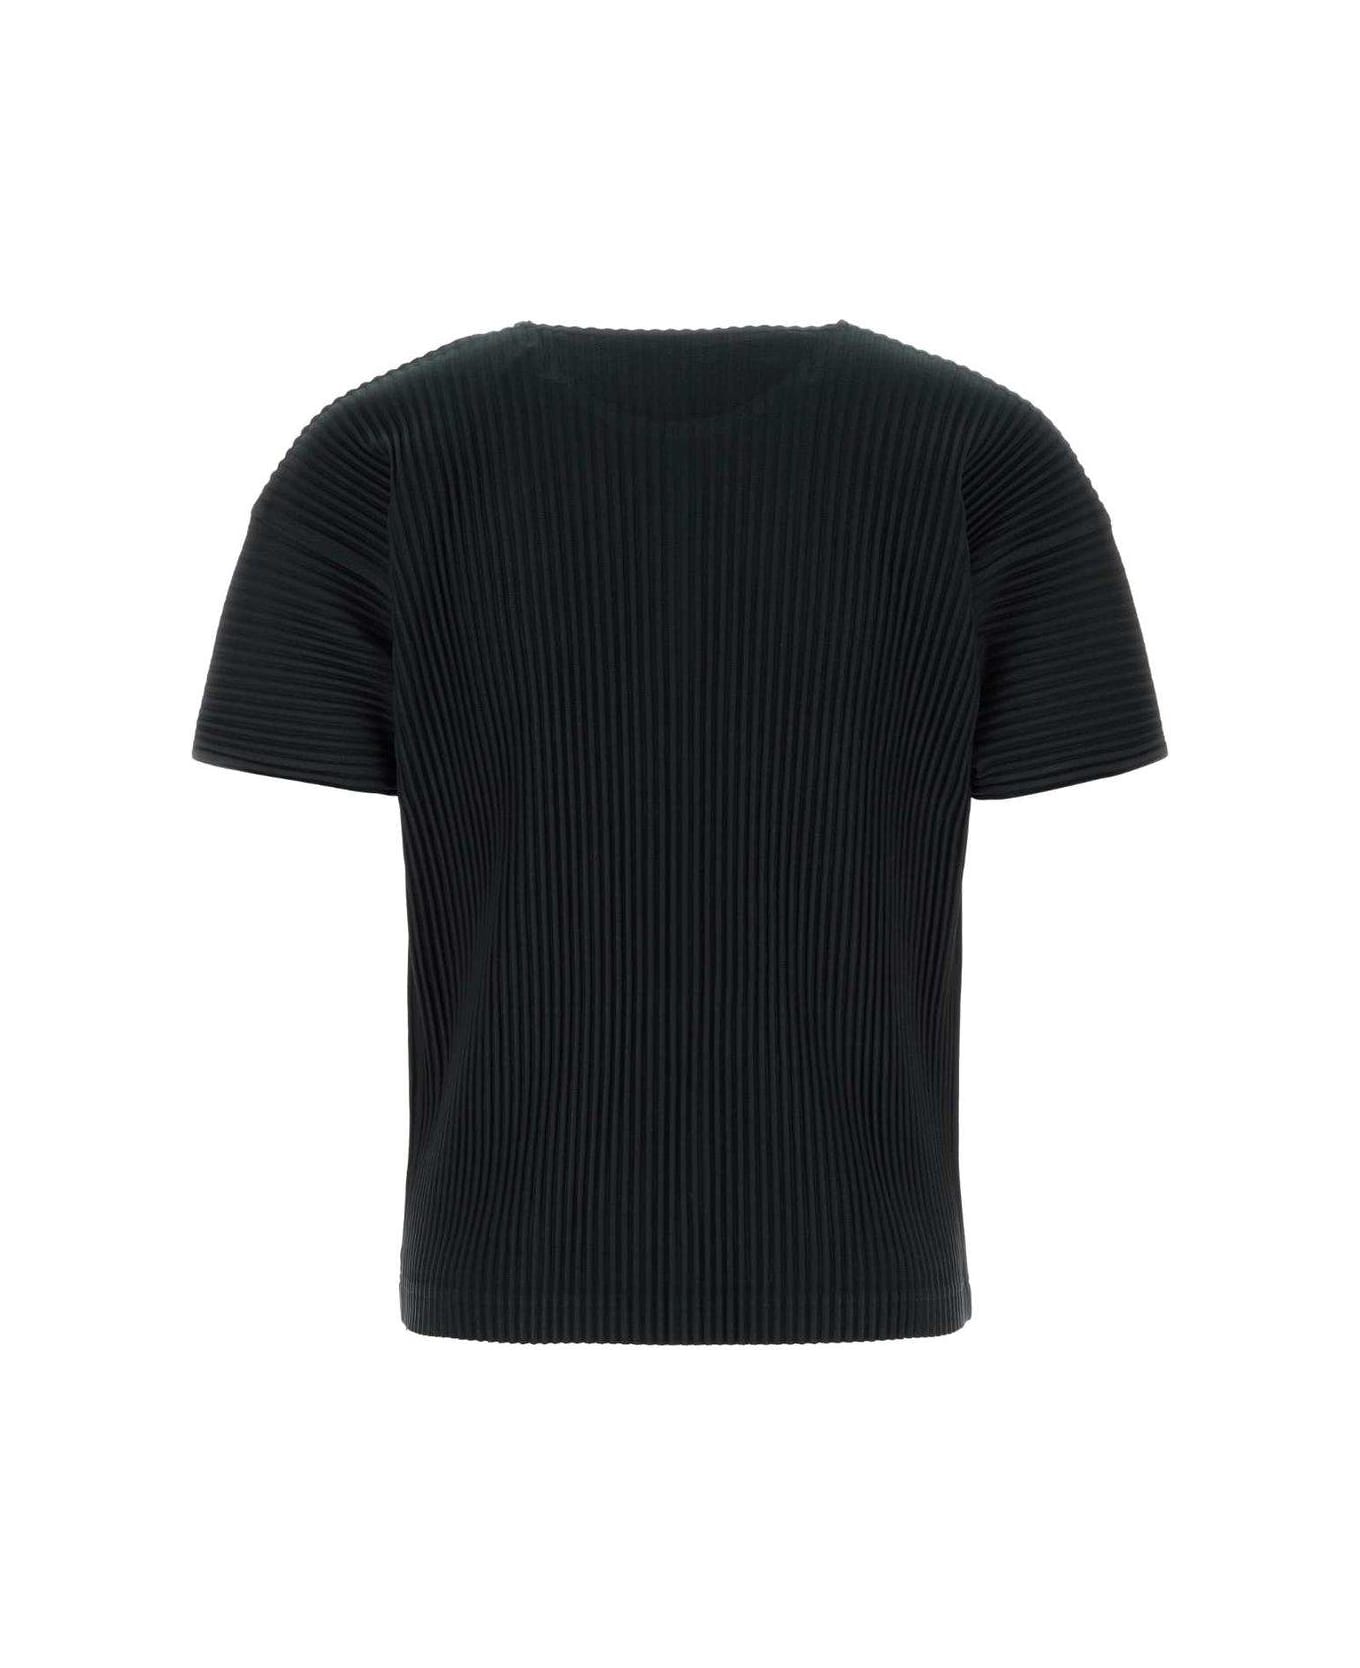 Homme Plissé Issey Miyake Crewneck Short-sleeved T-shirt - Black シャツ